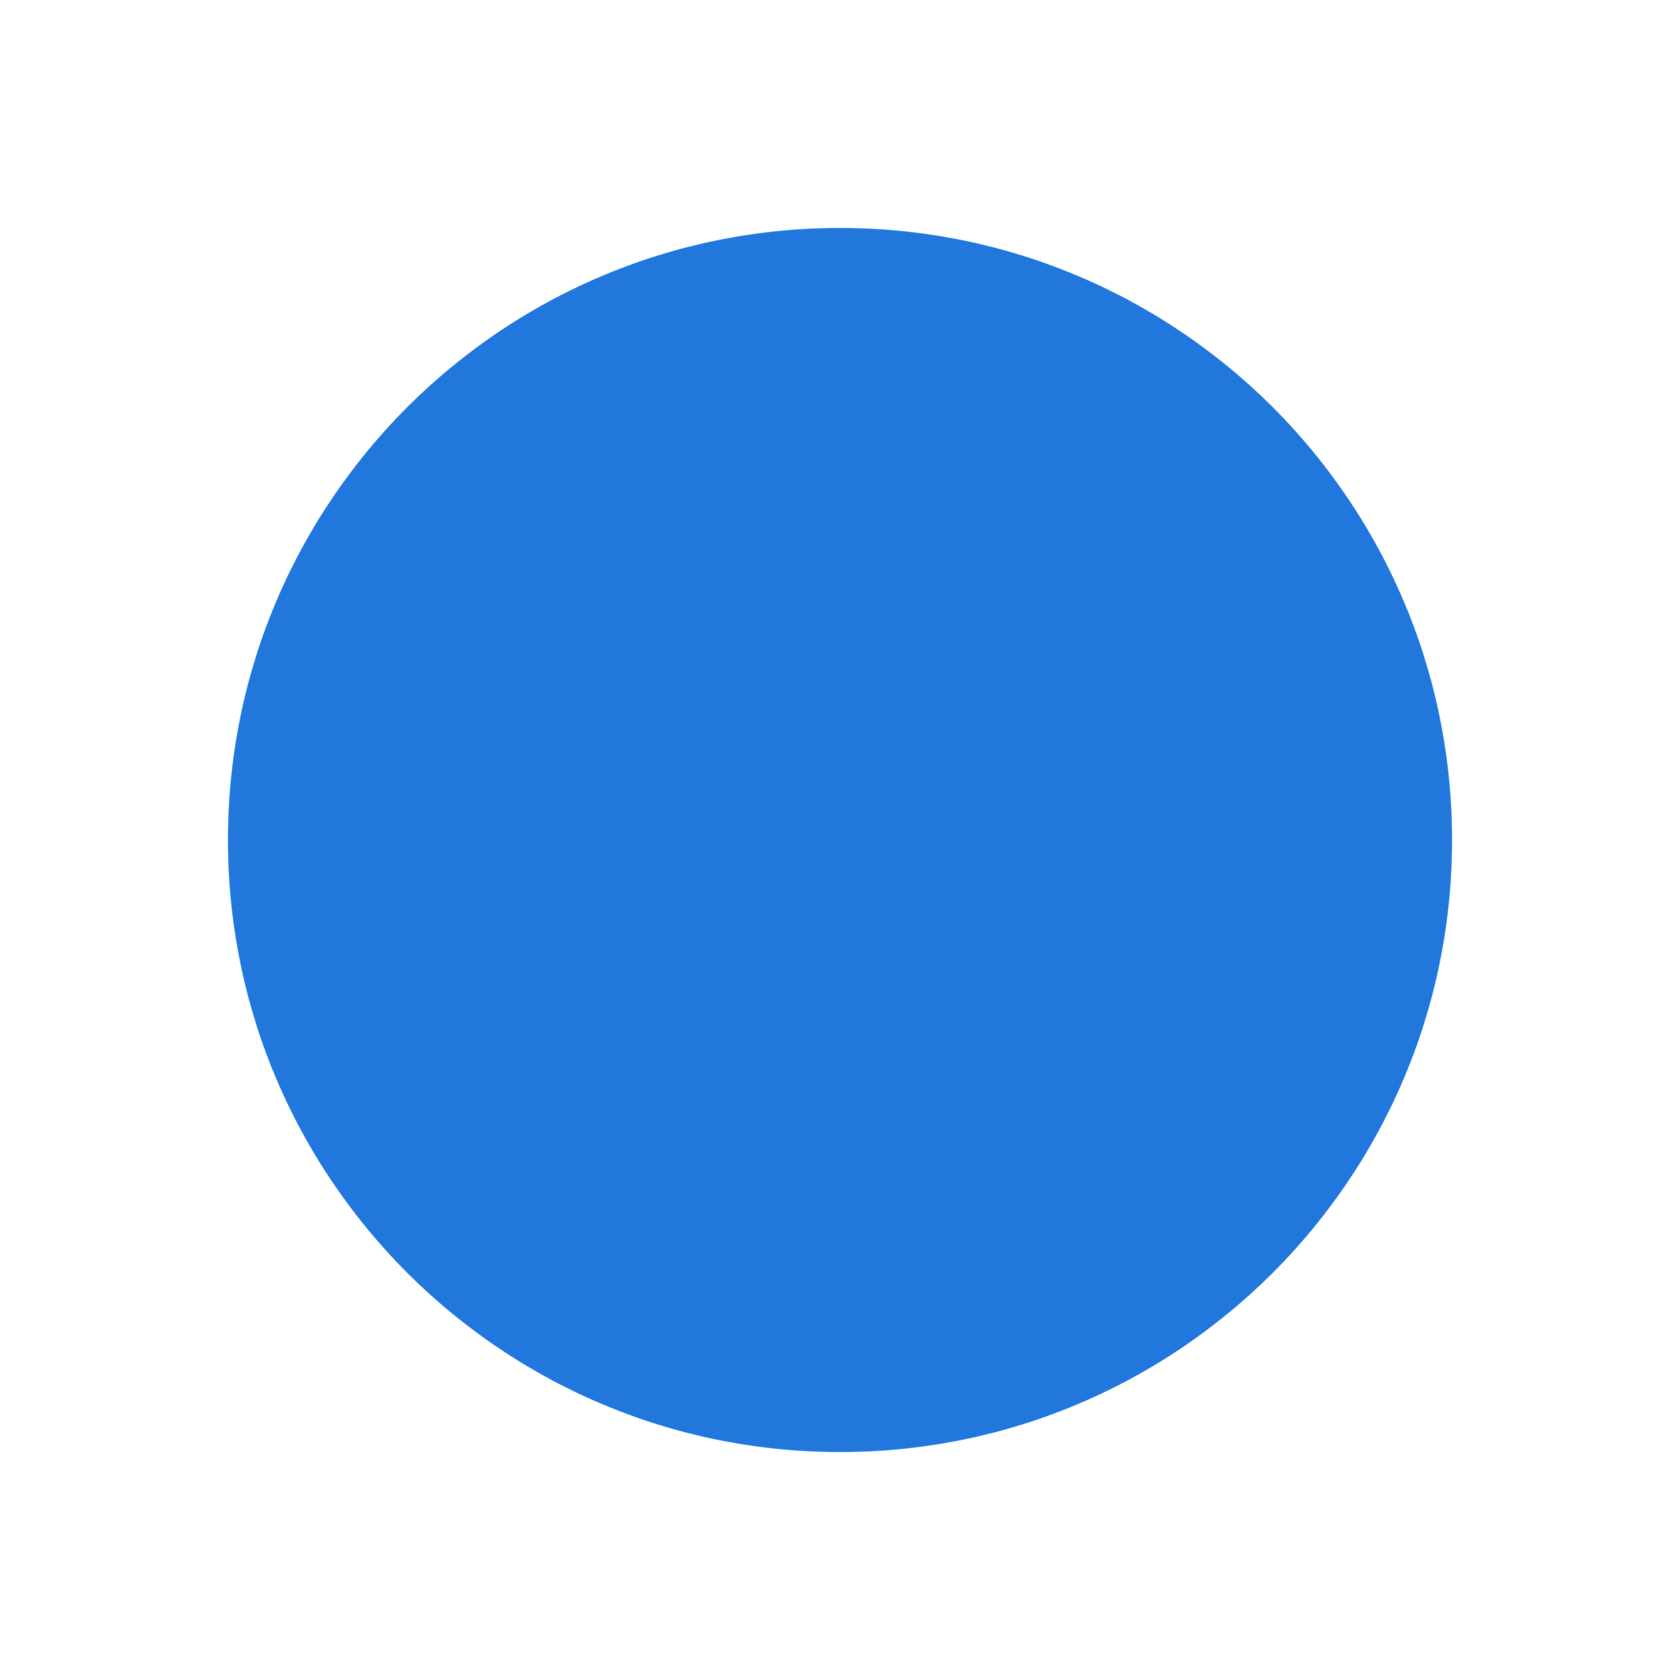 Круг з. Голубой круг. Синий круг на белом фоне. Синий круг на прозрачном фоне. Черный кружок.